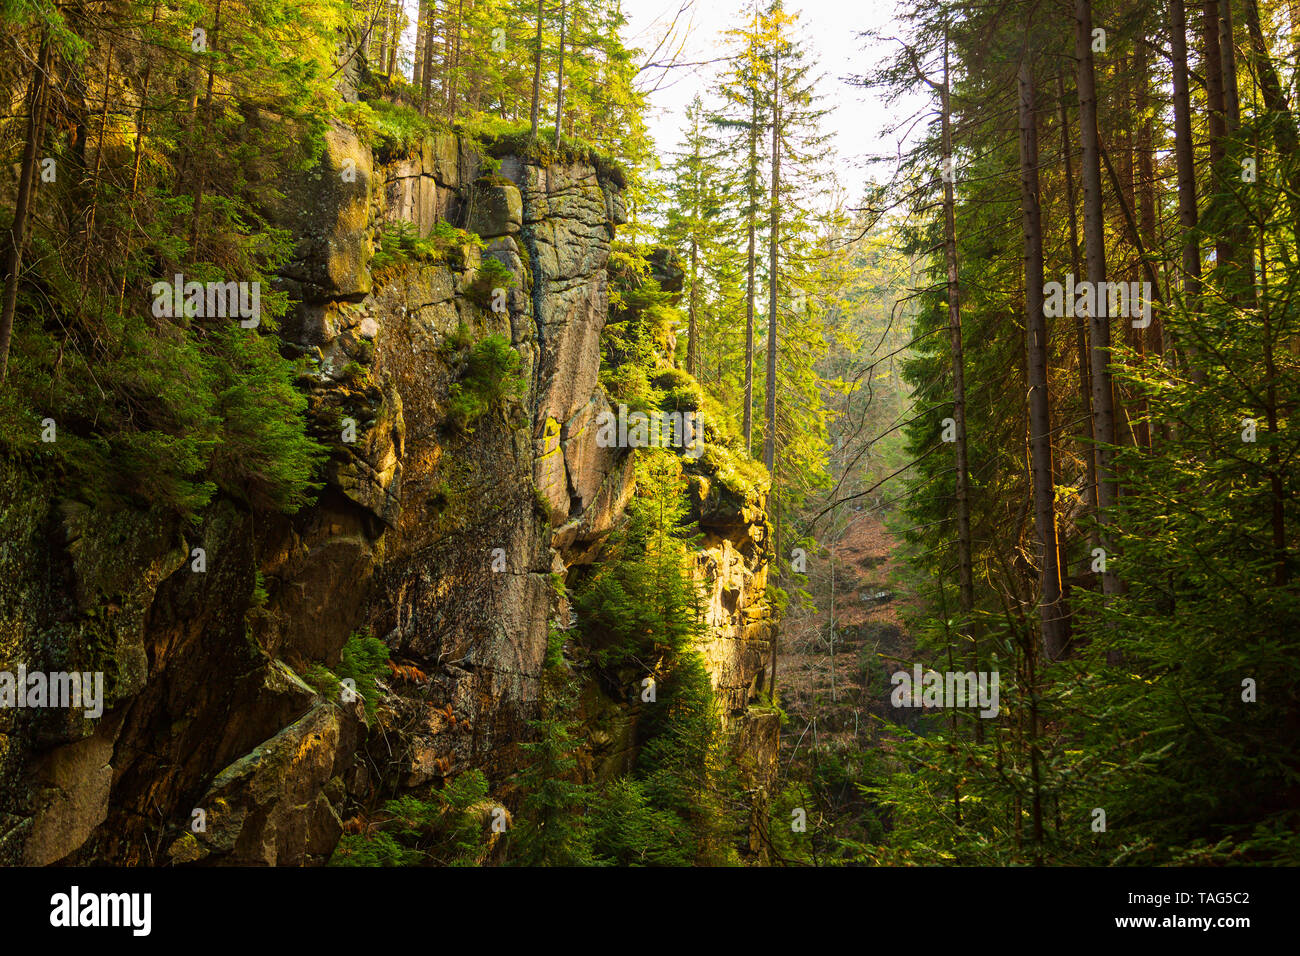 Montagna Kamienczyk burrone in pino foresta europea Foto Stock